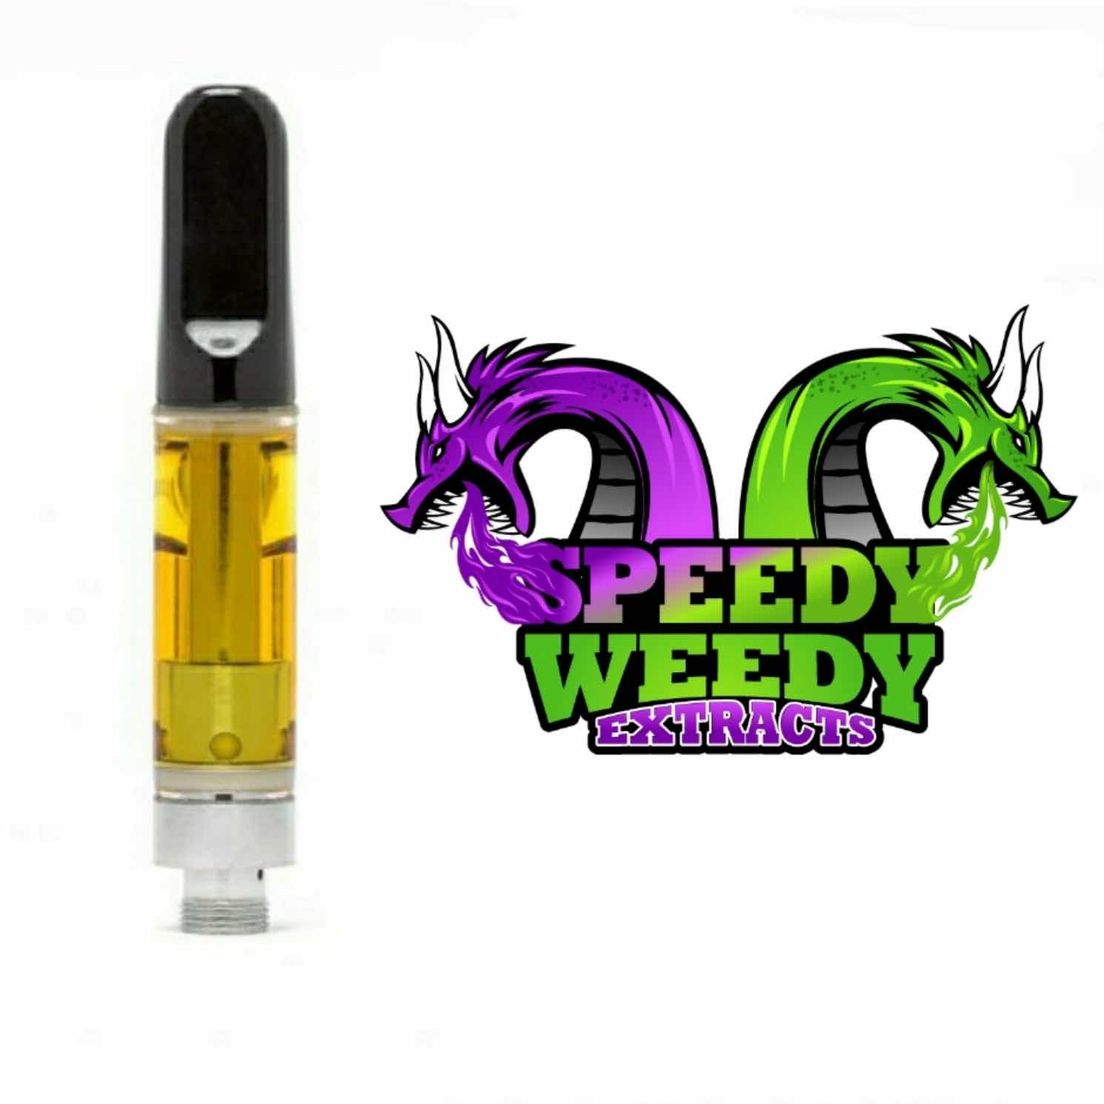 1. Speedy Weedy 1g THC Cartridge - Blue Dream (H)